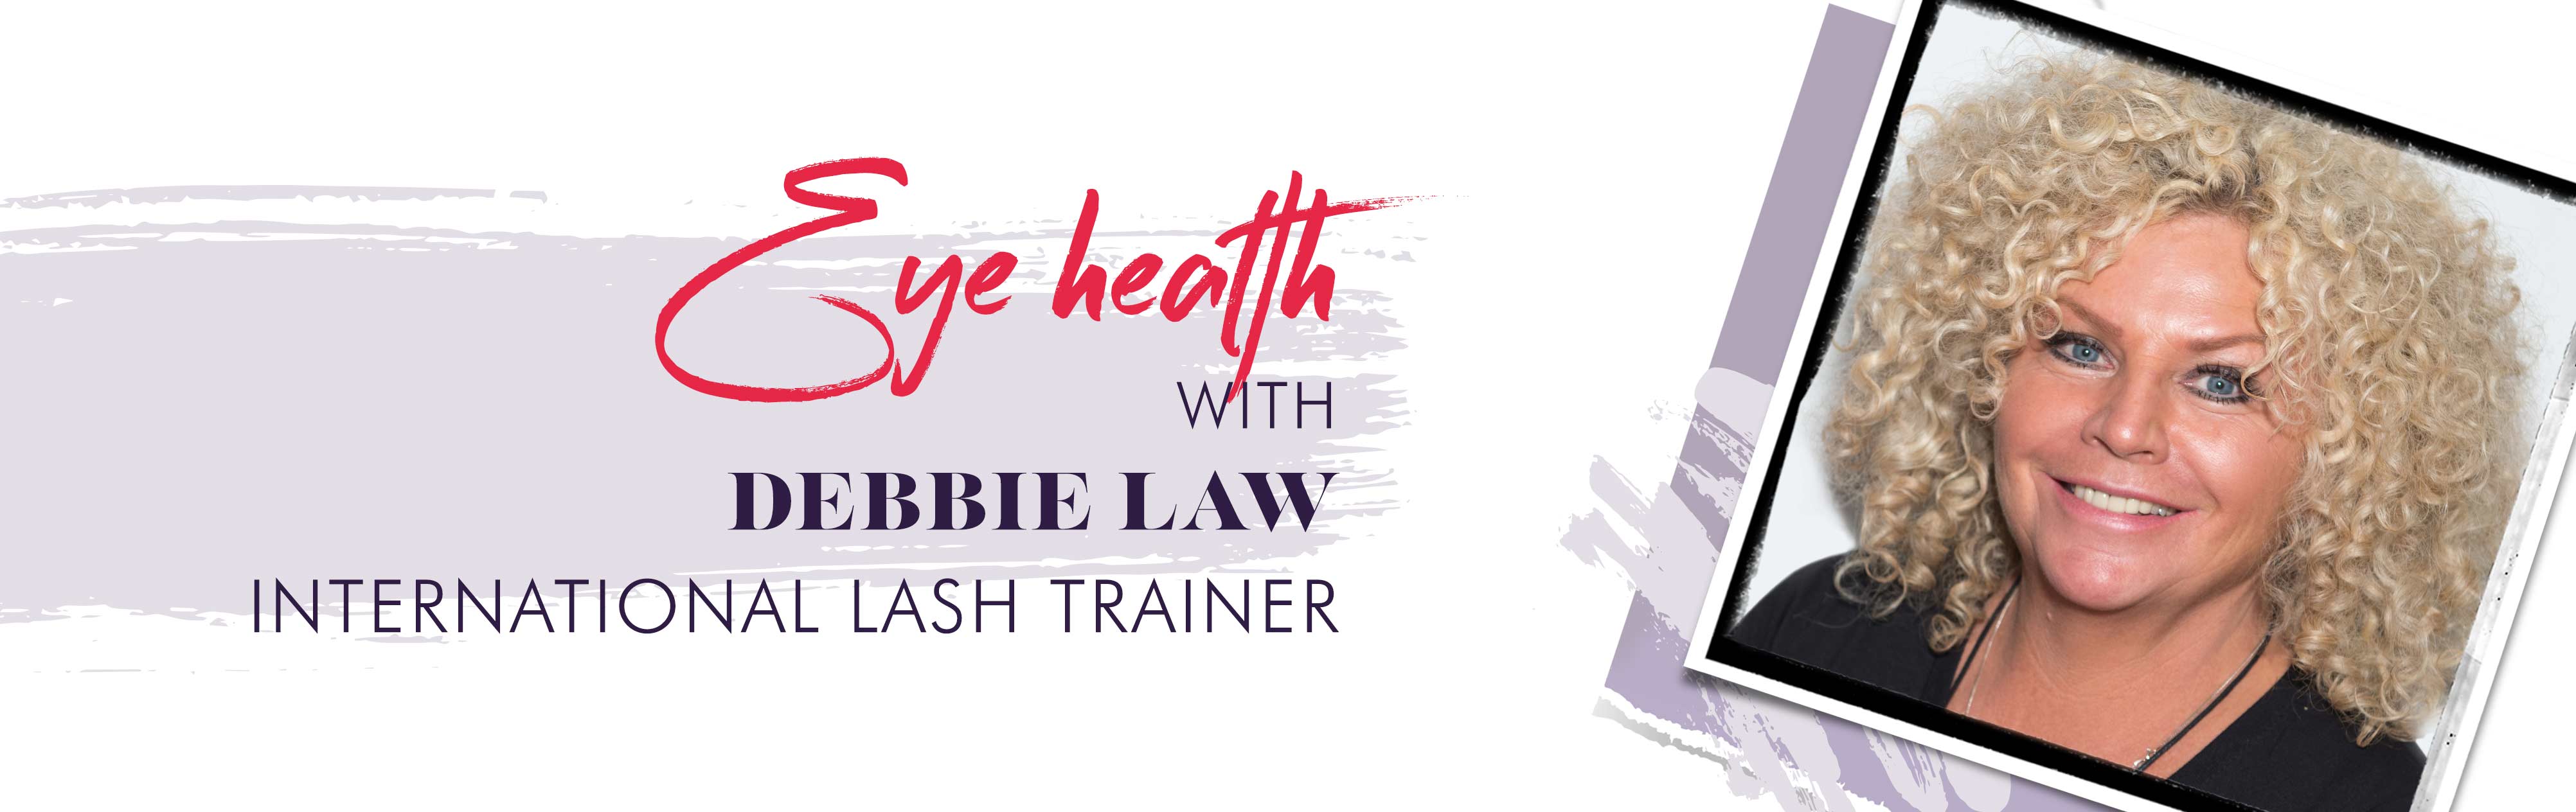 Get to know: International Lash Trainer and Artist – Debbie Law